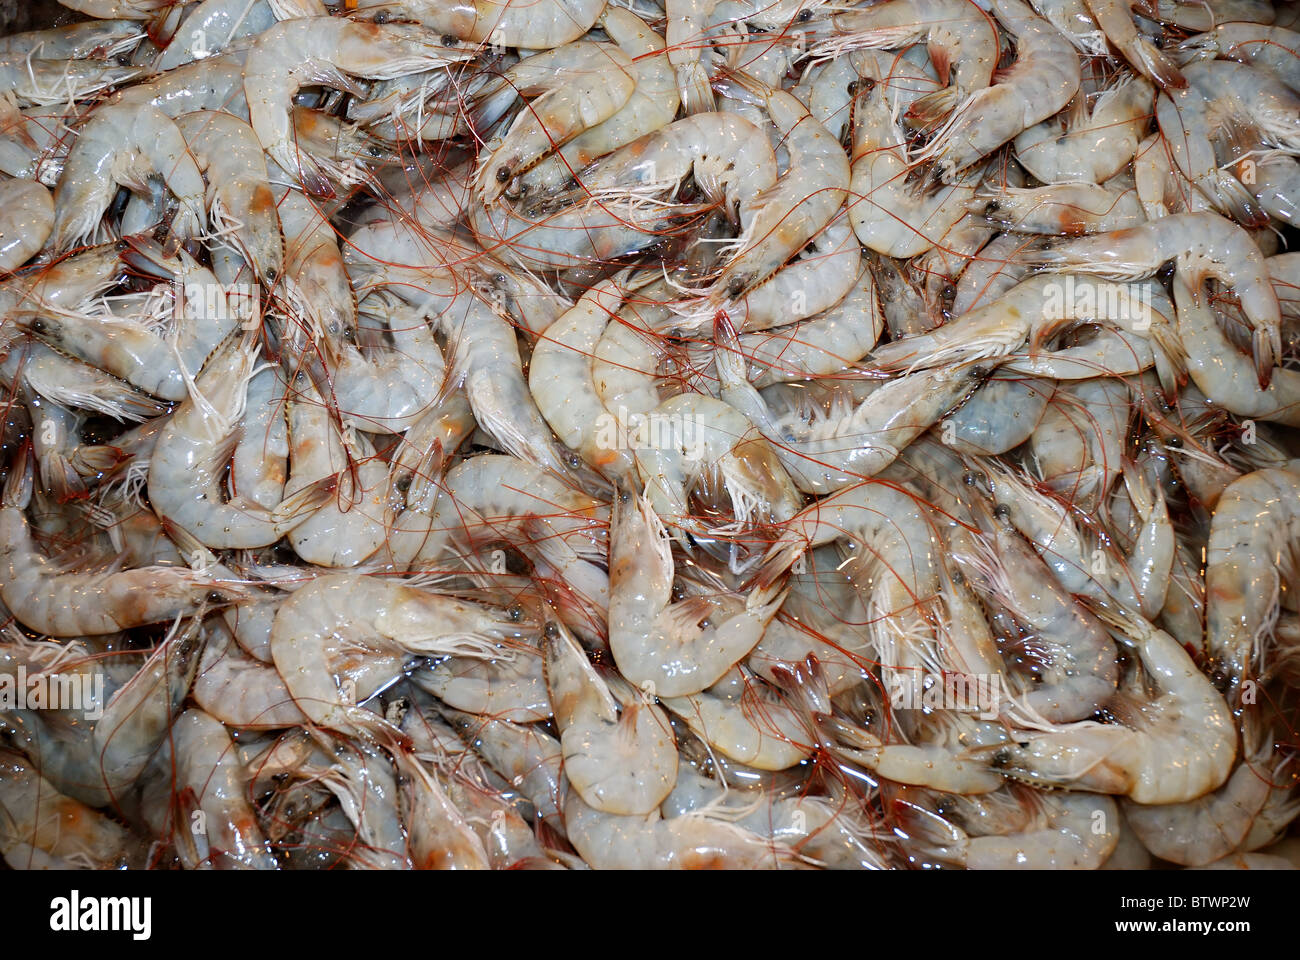 Raw prawns seafood Stock Photo